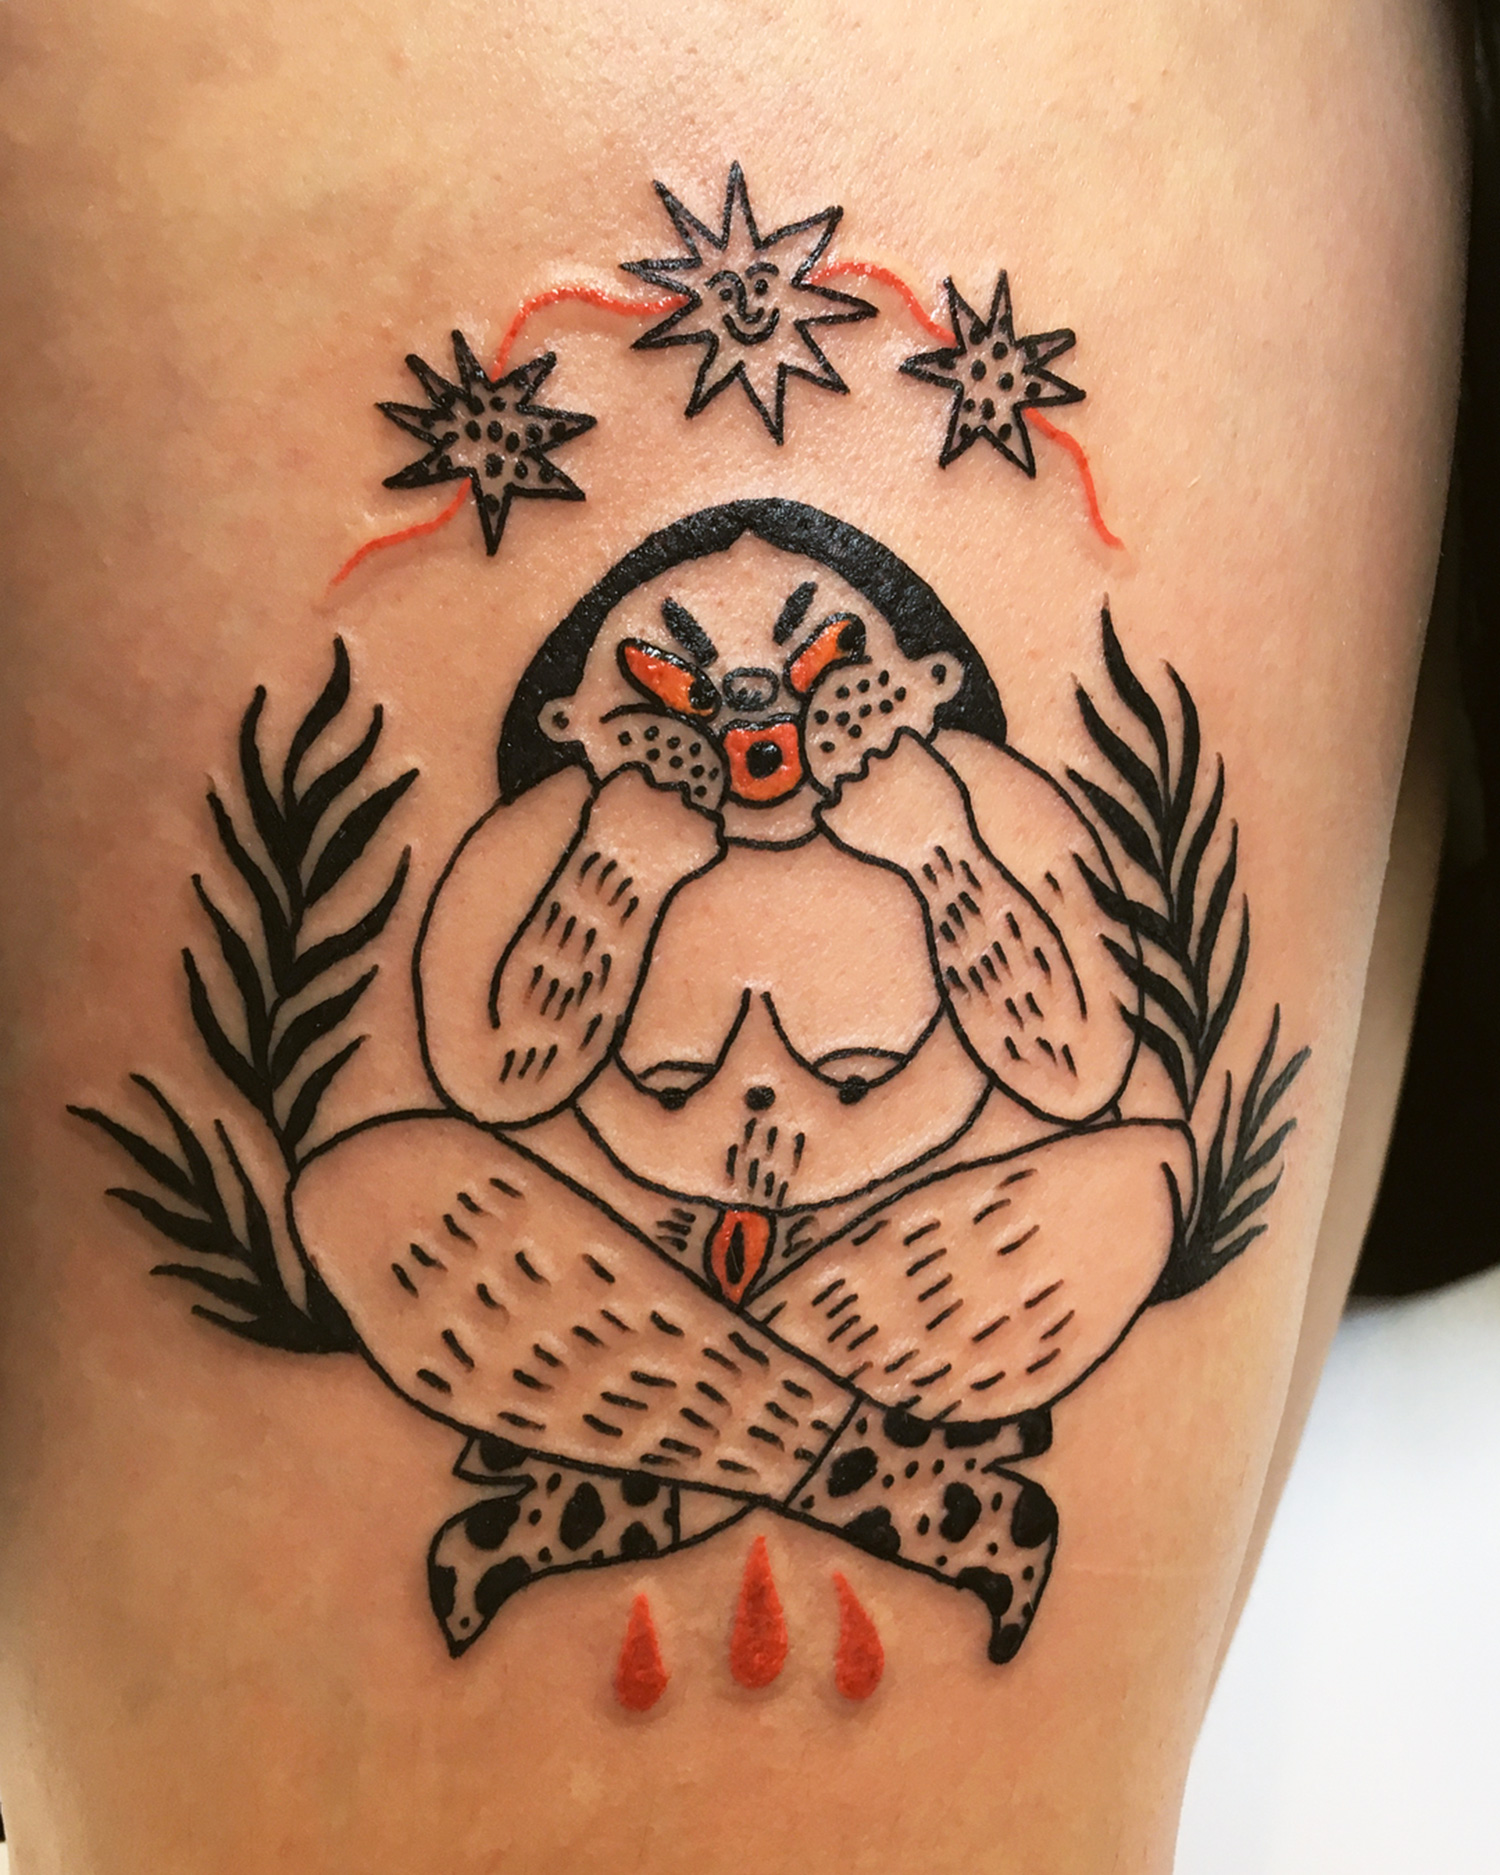 Charline Bataille - grumpy tattoo